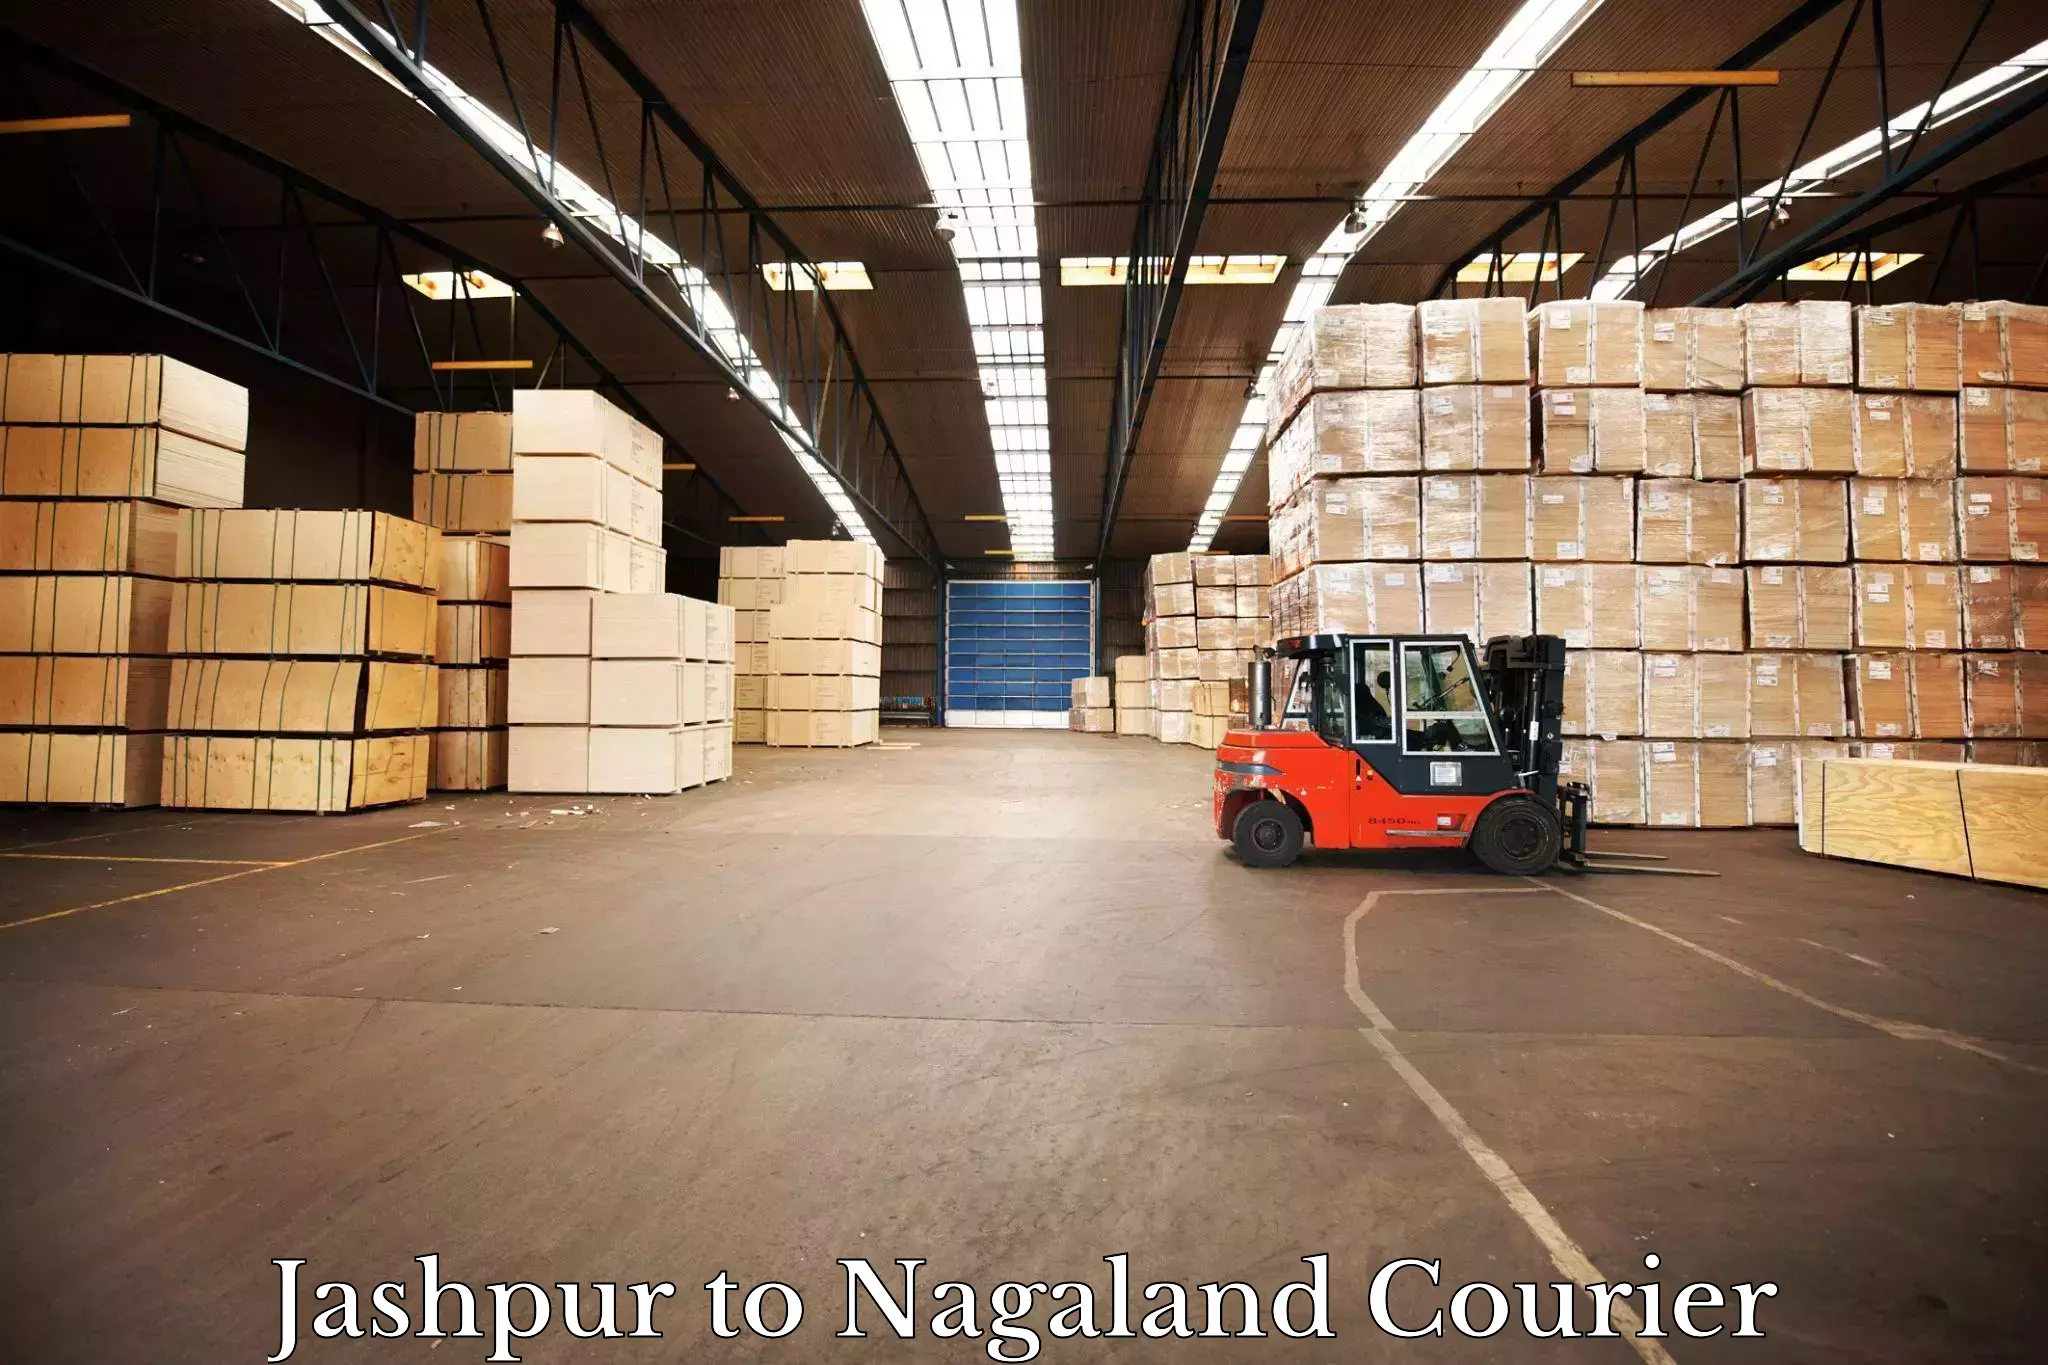 Express delivery network Jashpur to Nagaland